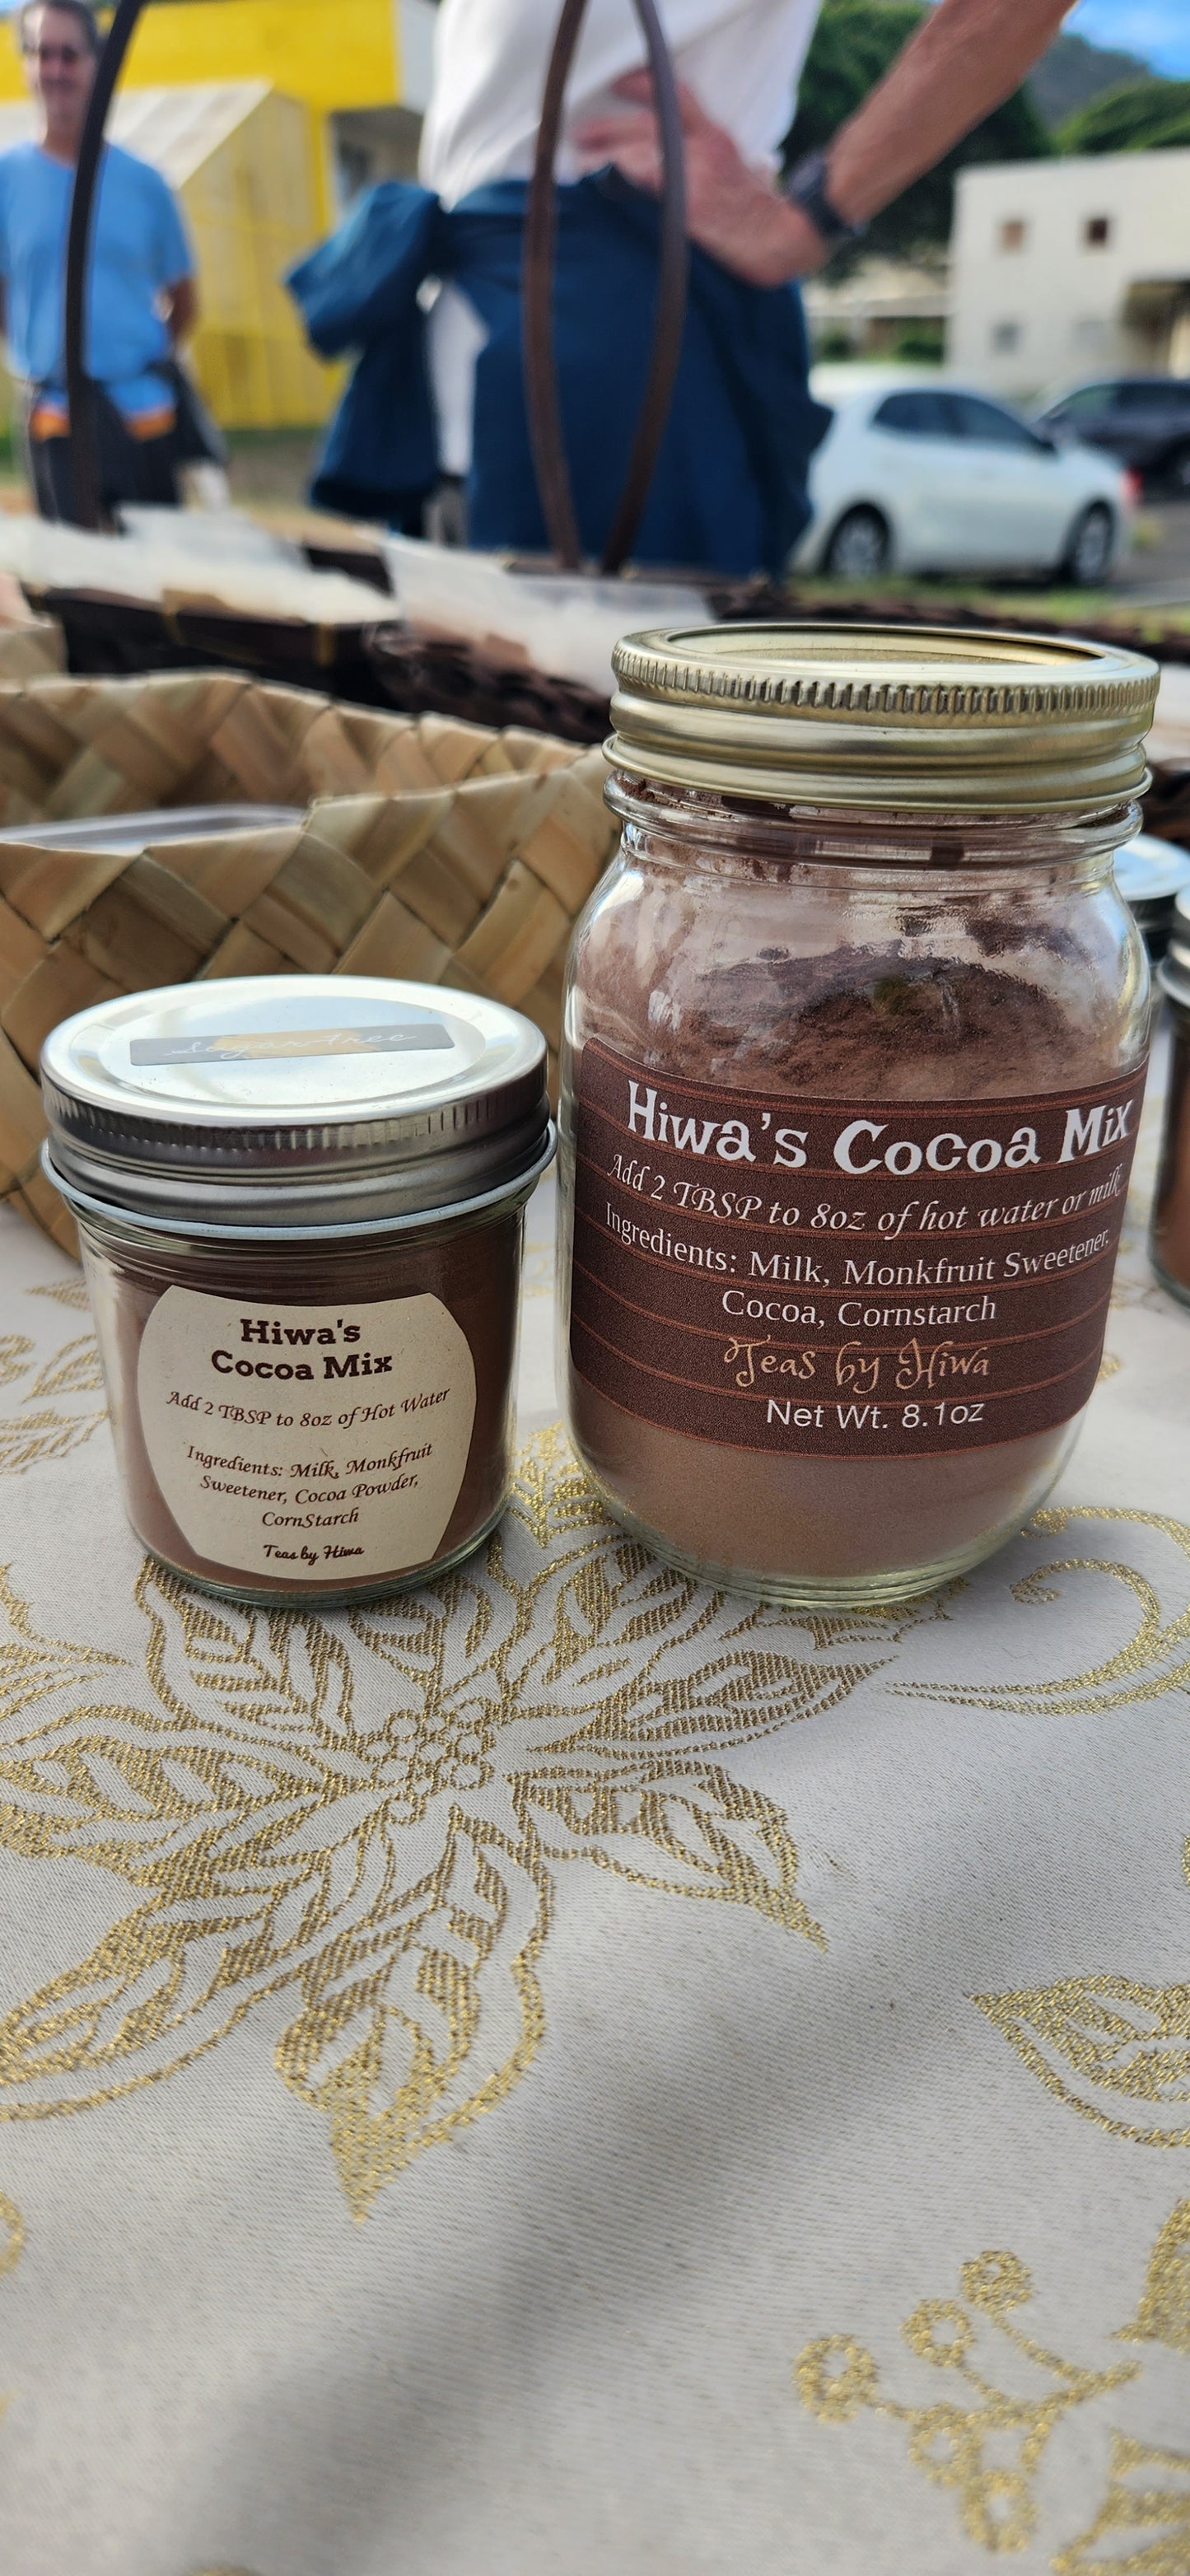 Hiwa's Hot Cocoa